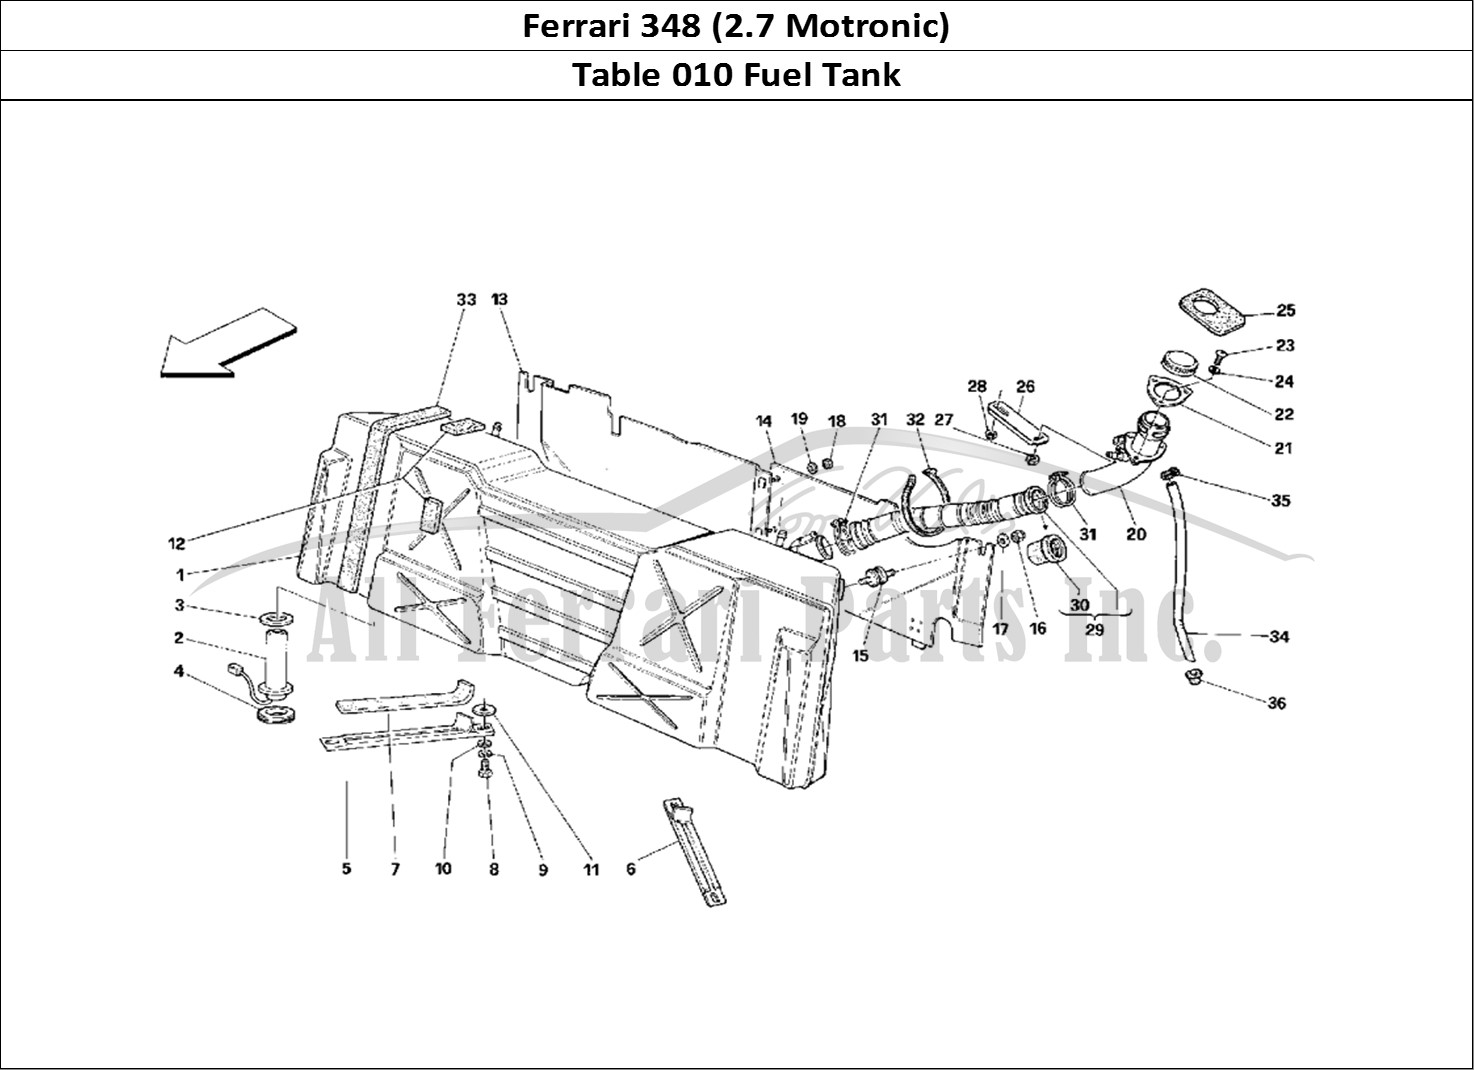 Ferrari Parts Ferrari 348 (2.7 Motronic) Page 010 Fuel Tank